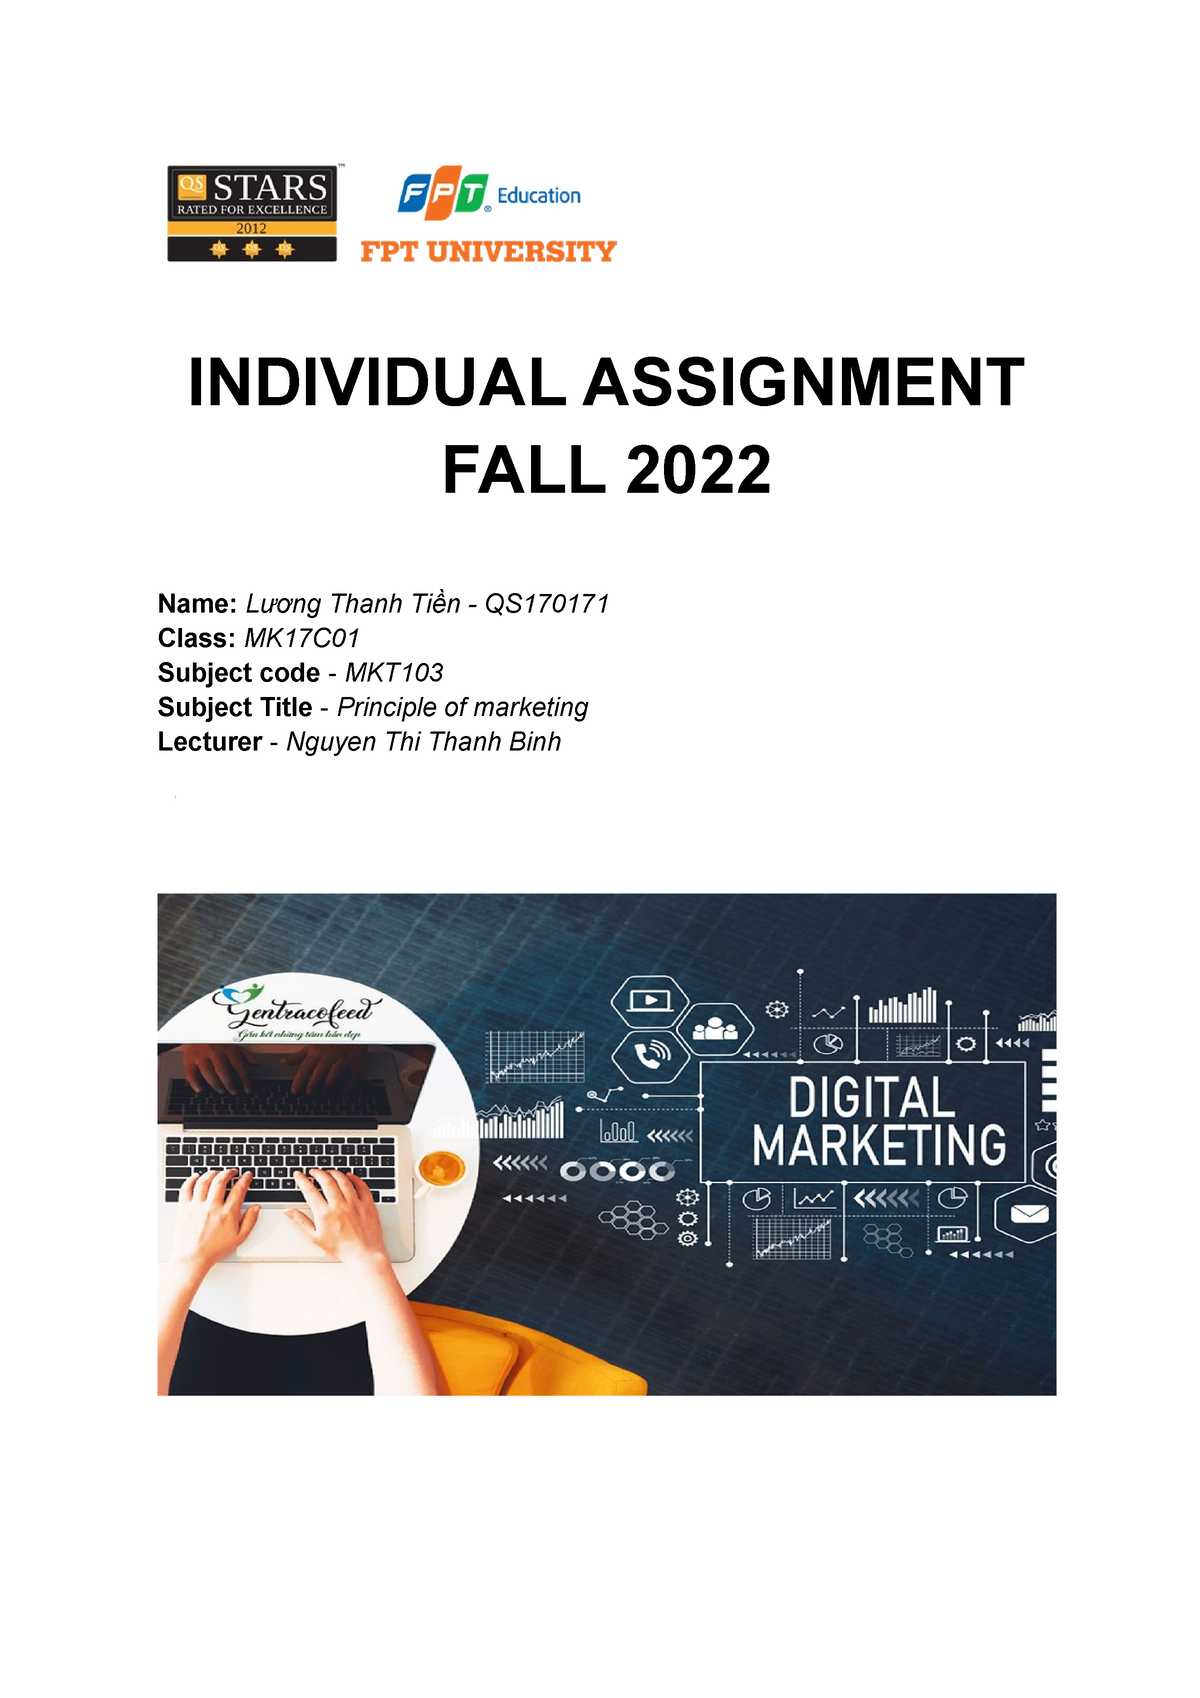 last date of assignment autumn 2022